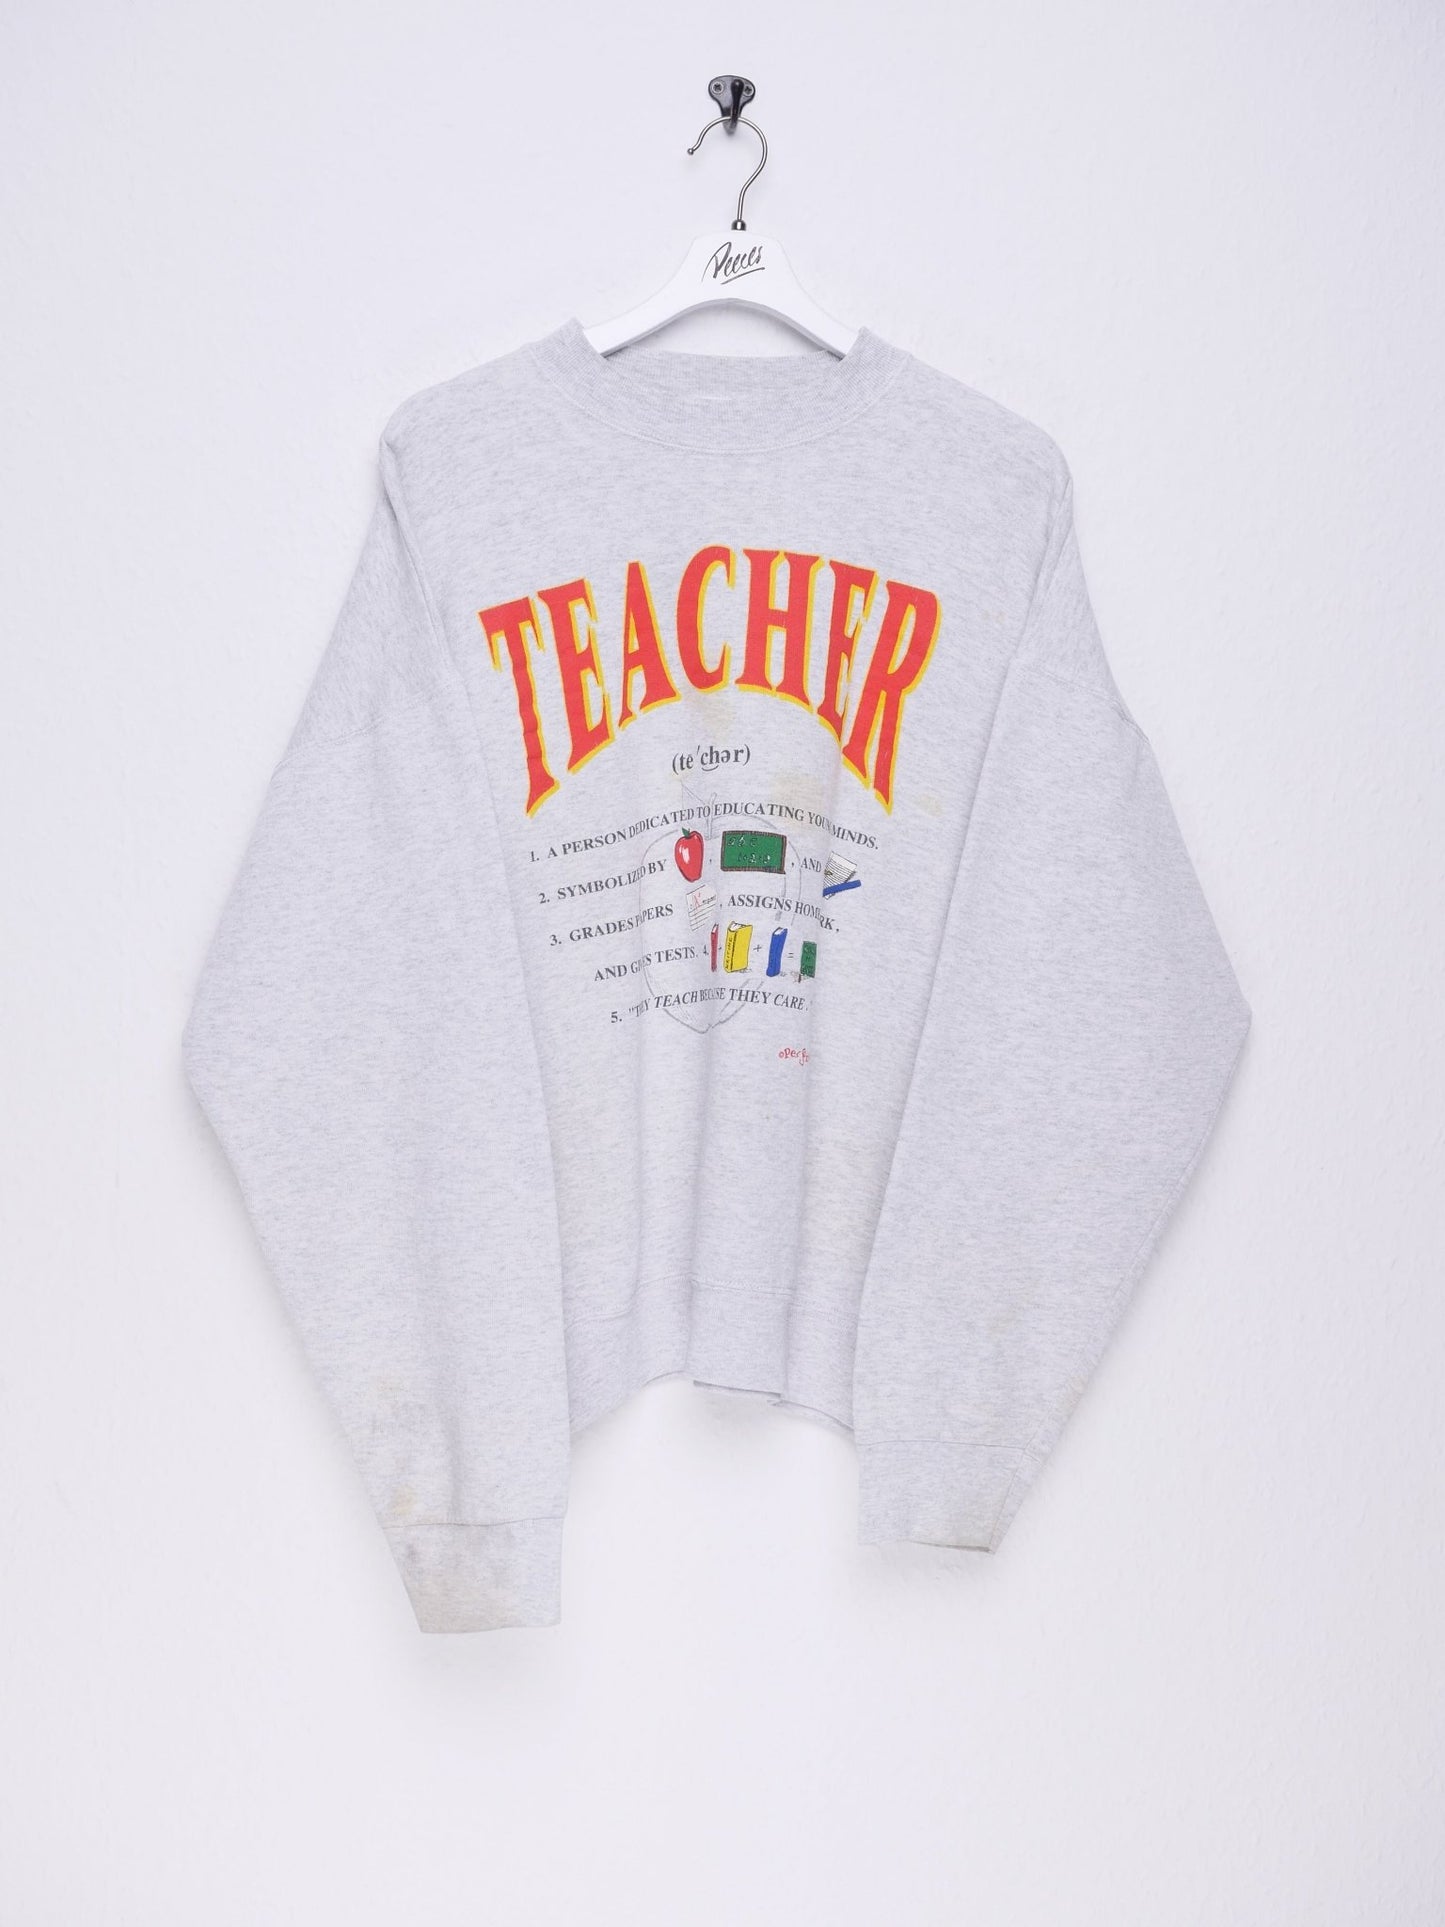 Teacher printed Graphic Vintage Sweater - Peeces